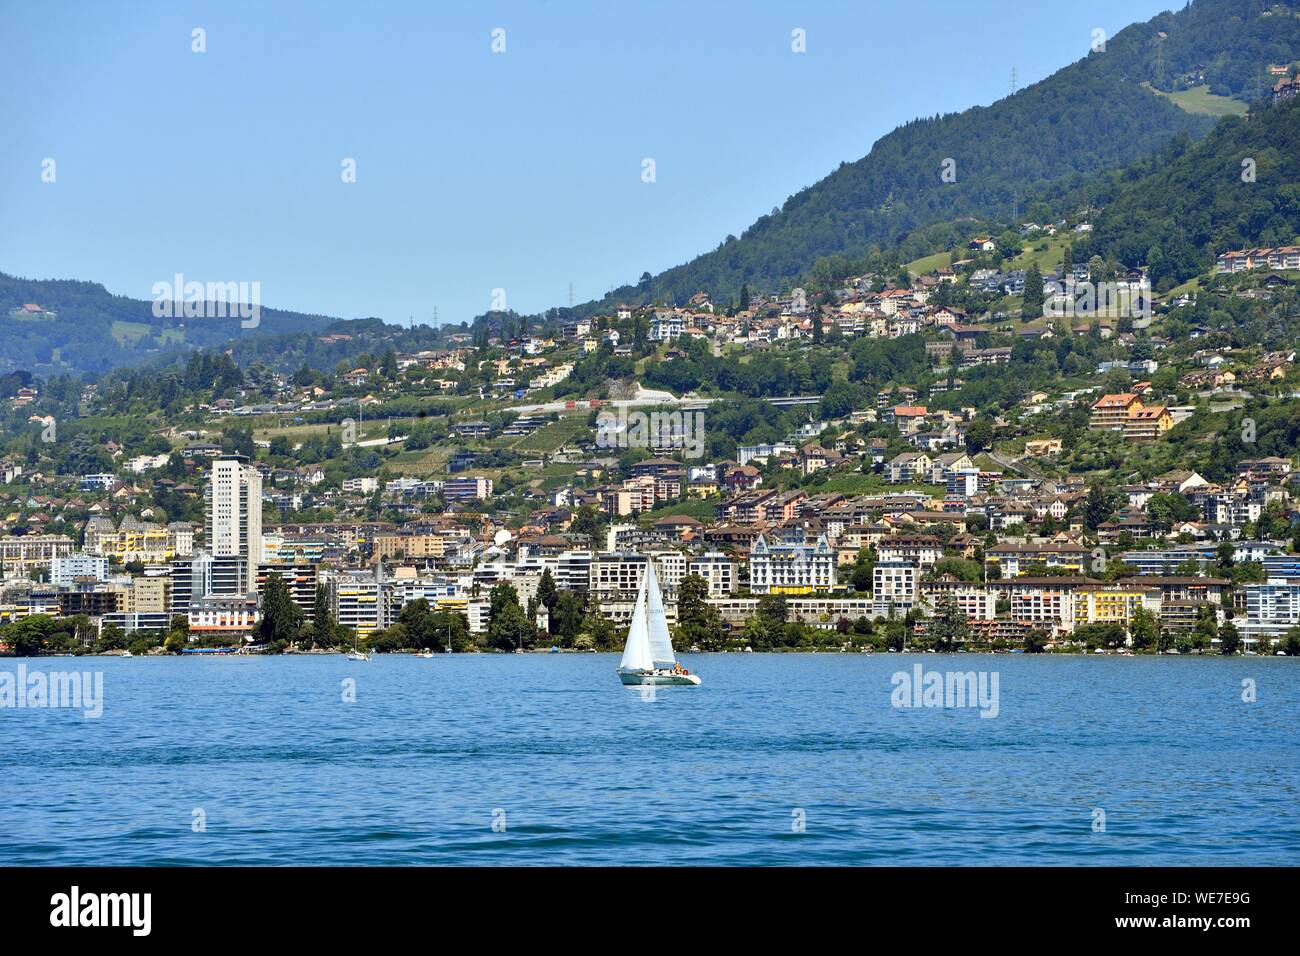 Suisse, Kanton Waadt, Genfer See, Montreux, Genfer See Banken Stockfoto